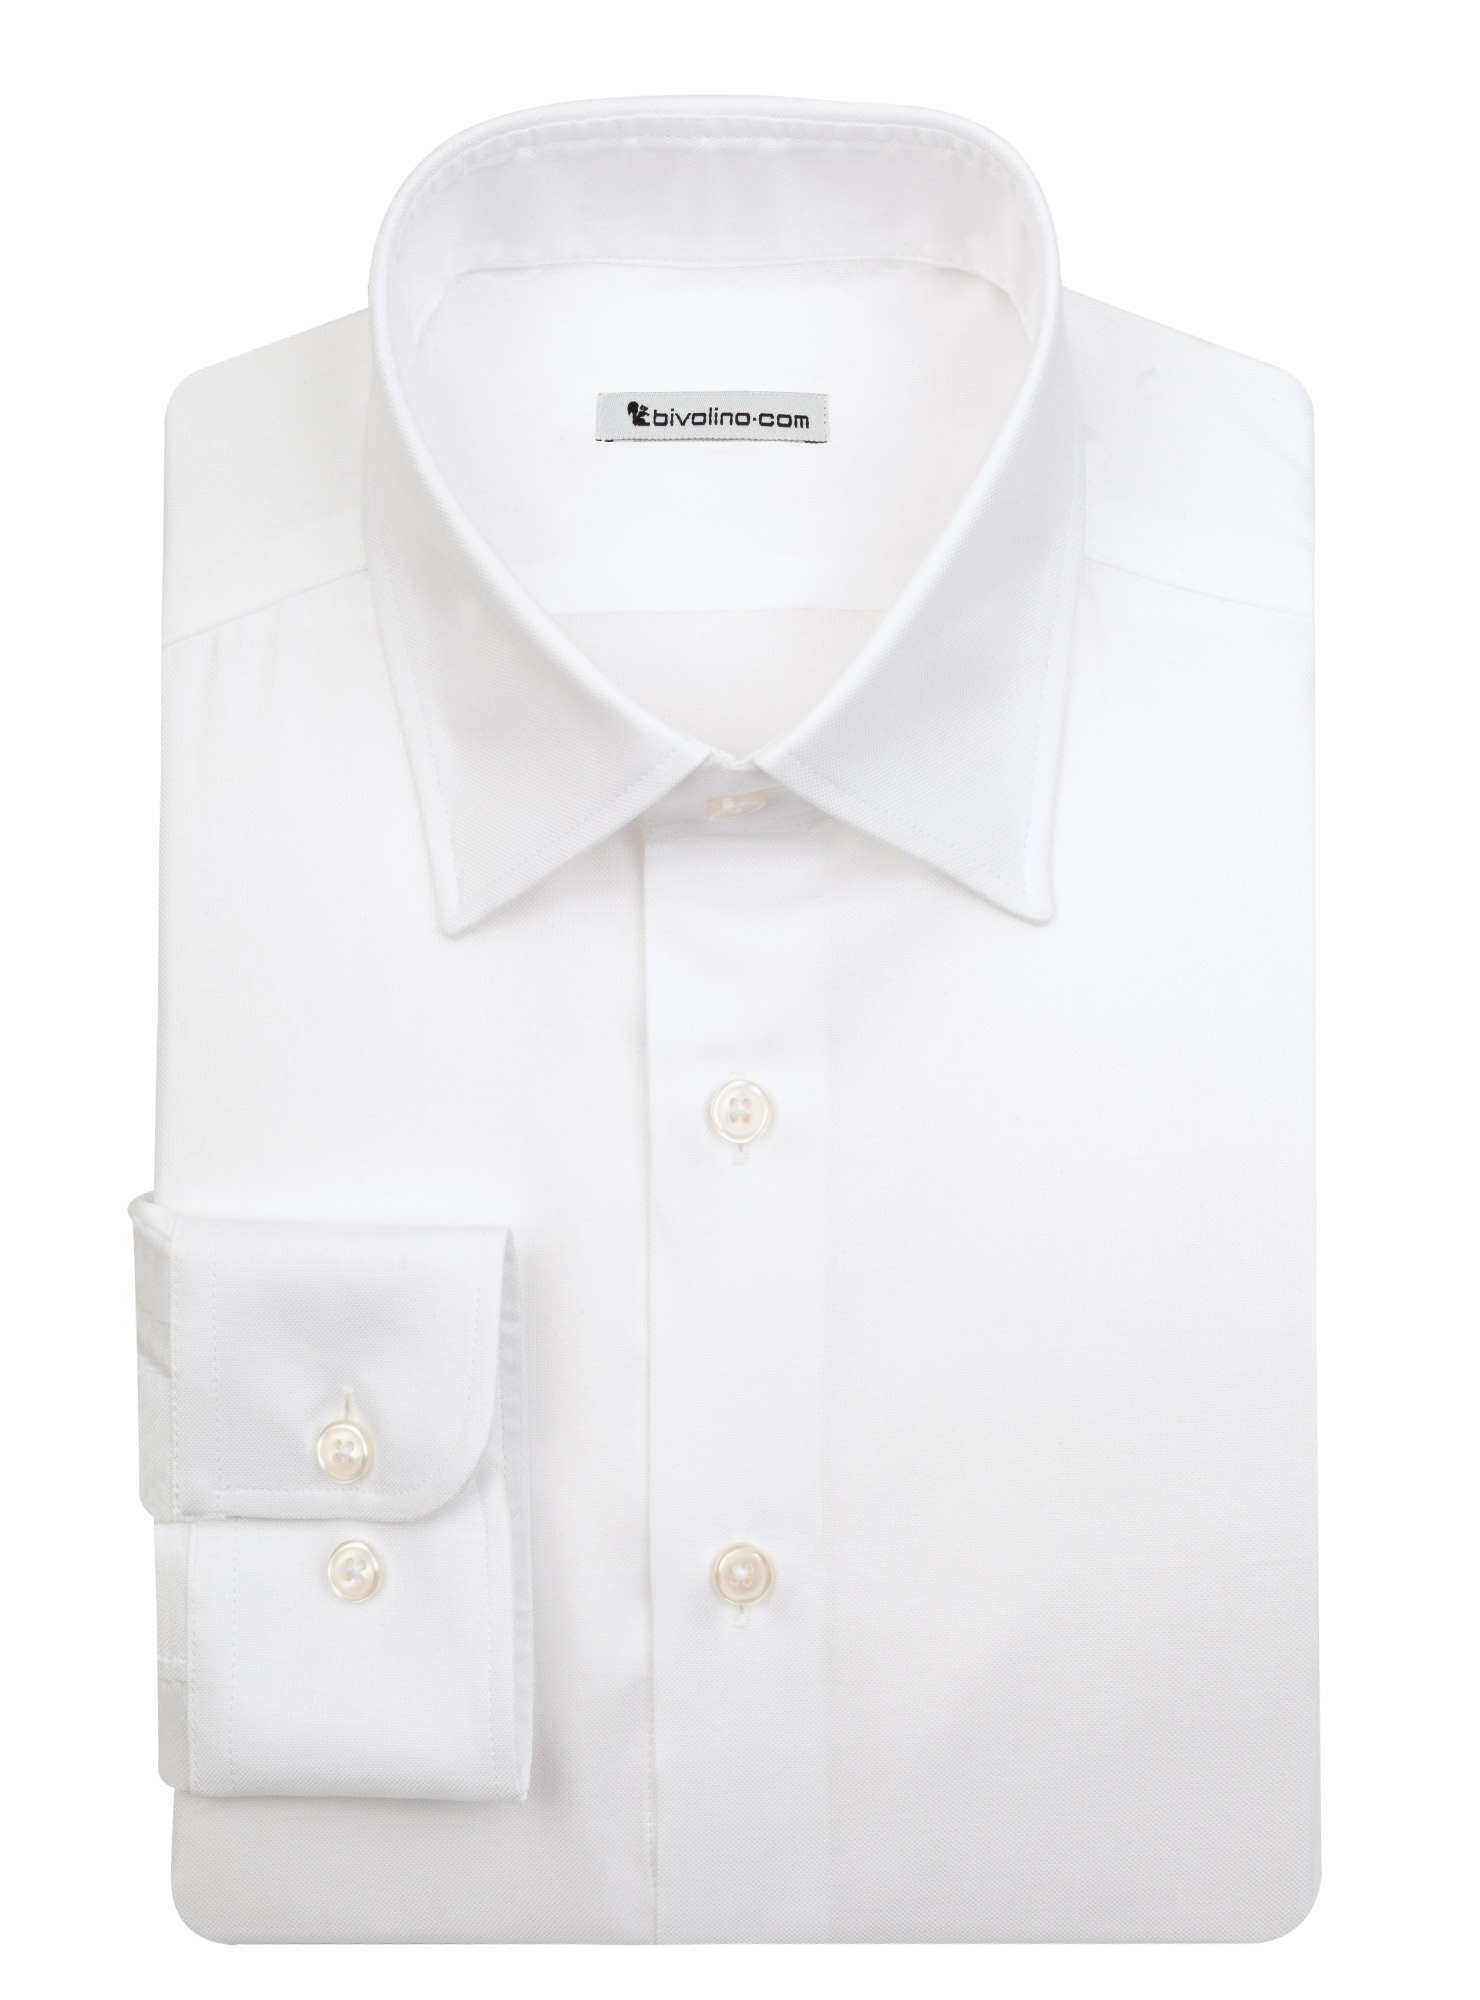 TREVISO - Royal oxford white cotton tailored shirt - LABA 2 